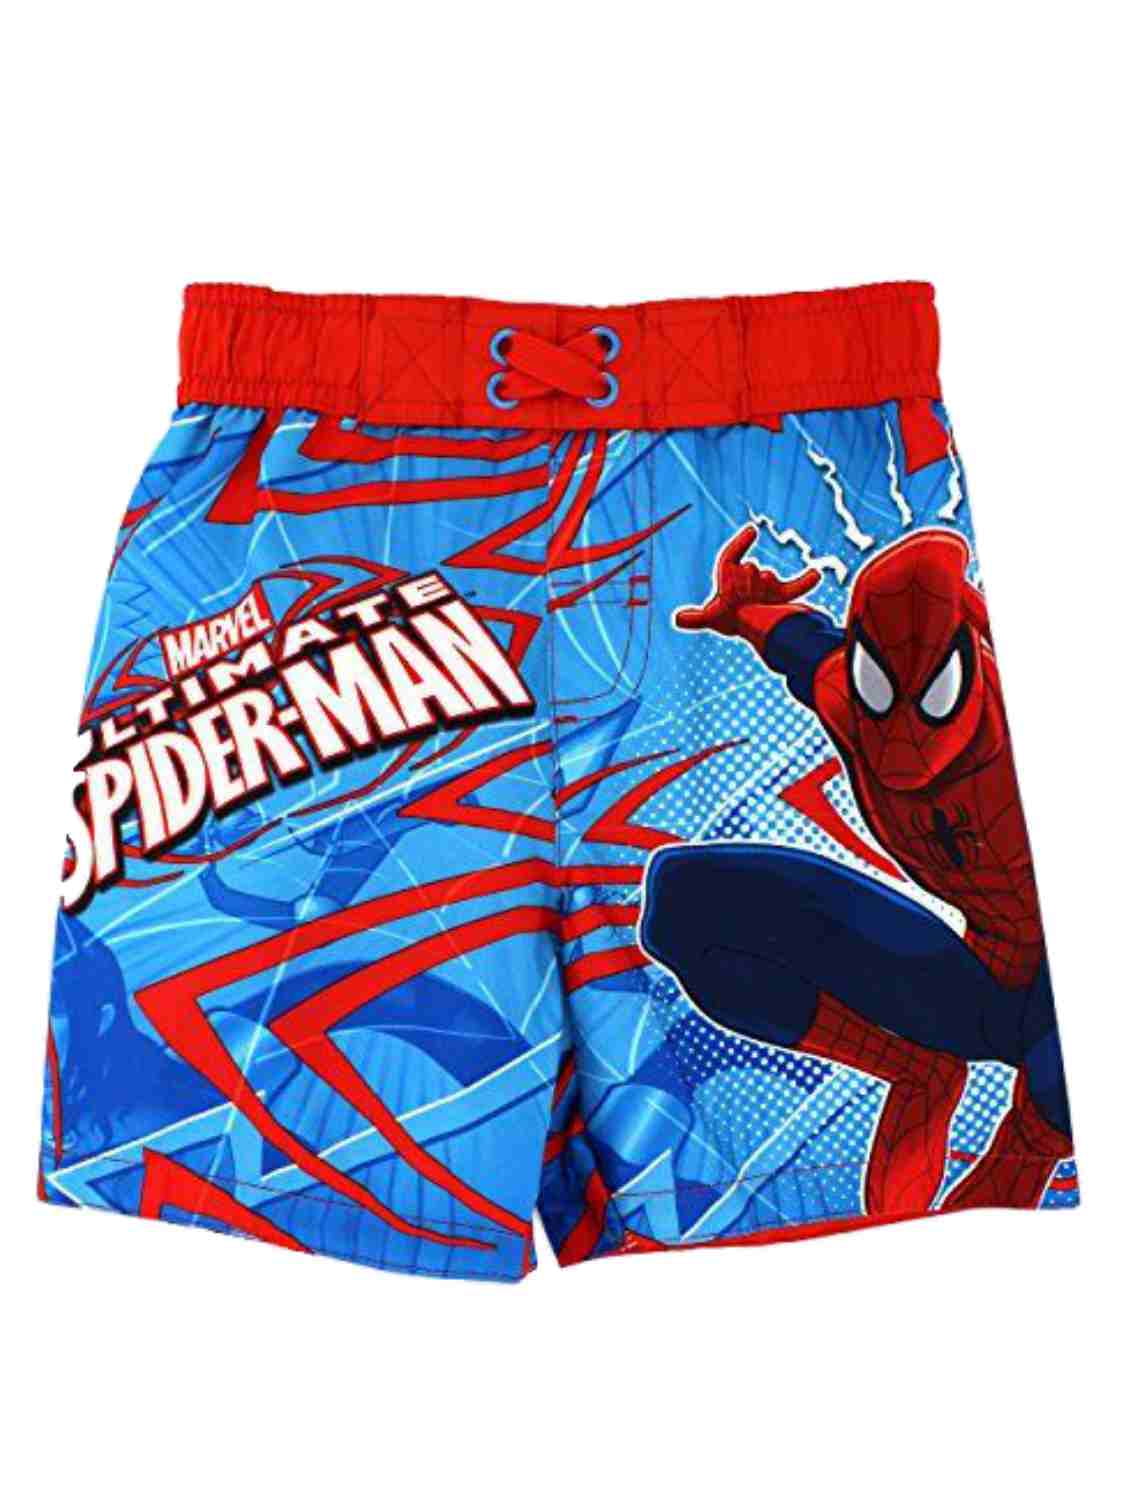 Spiderman Spider Man Red Blue Swim Suit Trunks Shorts UPF50 Boys Toddler 4T 